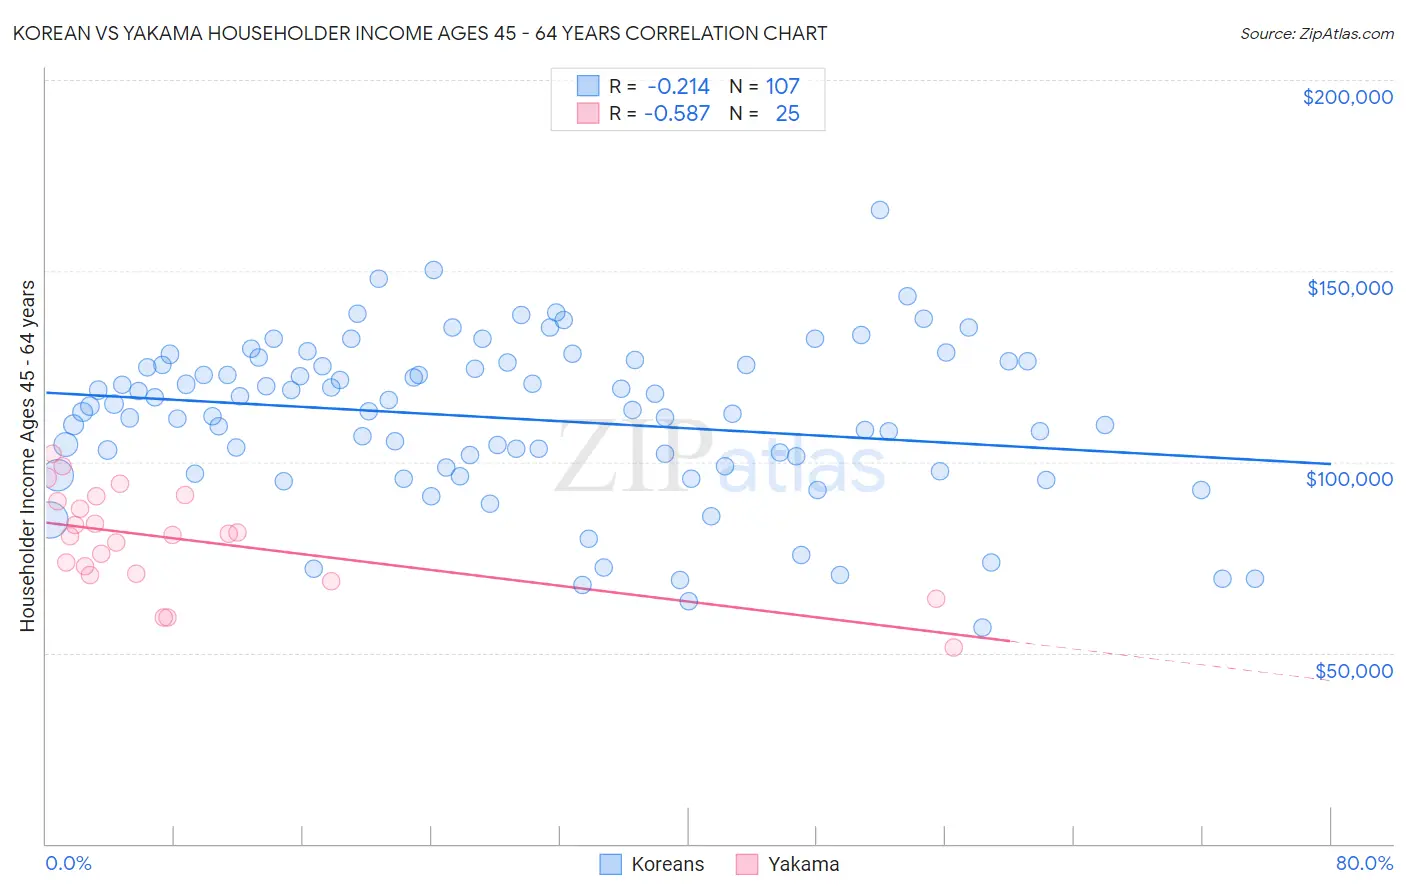 Korean vs Yakama Householder Income Ages 45 - 64 years